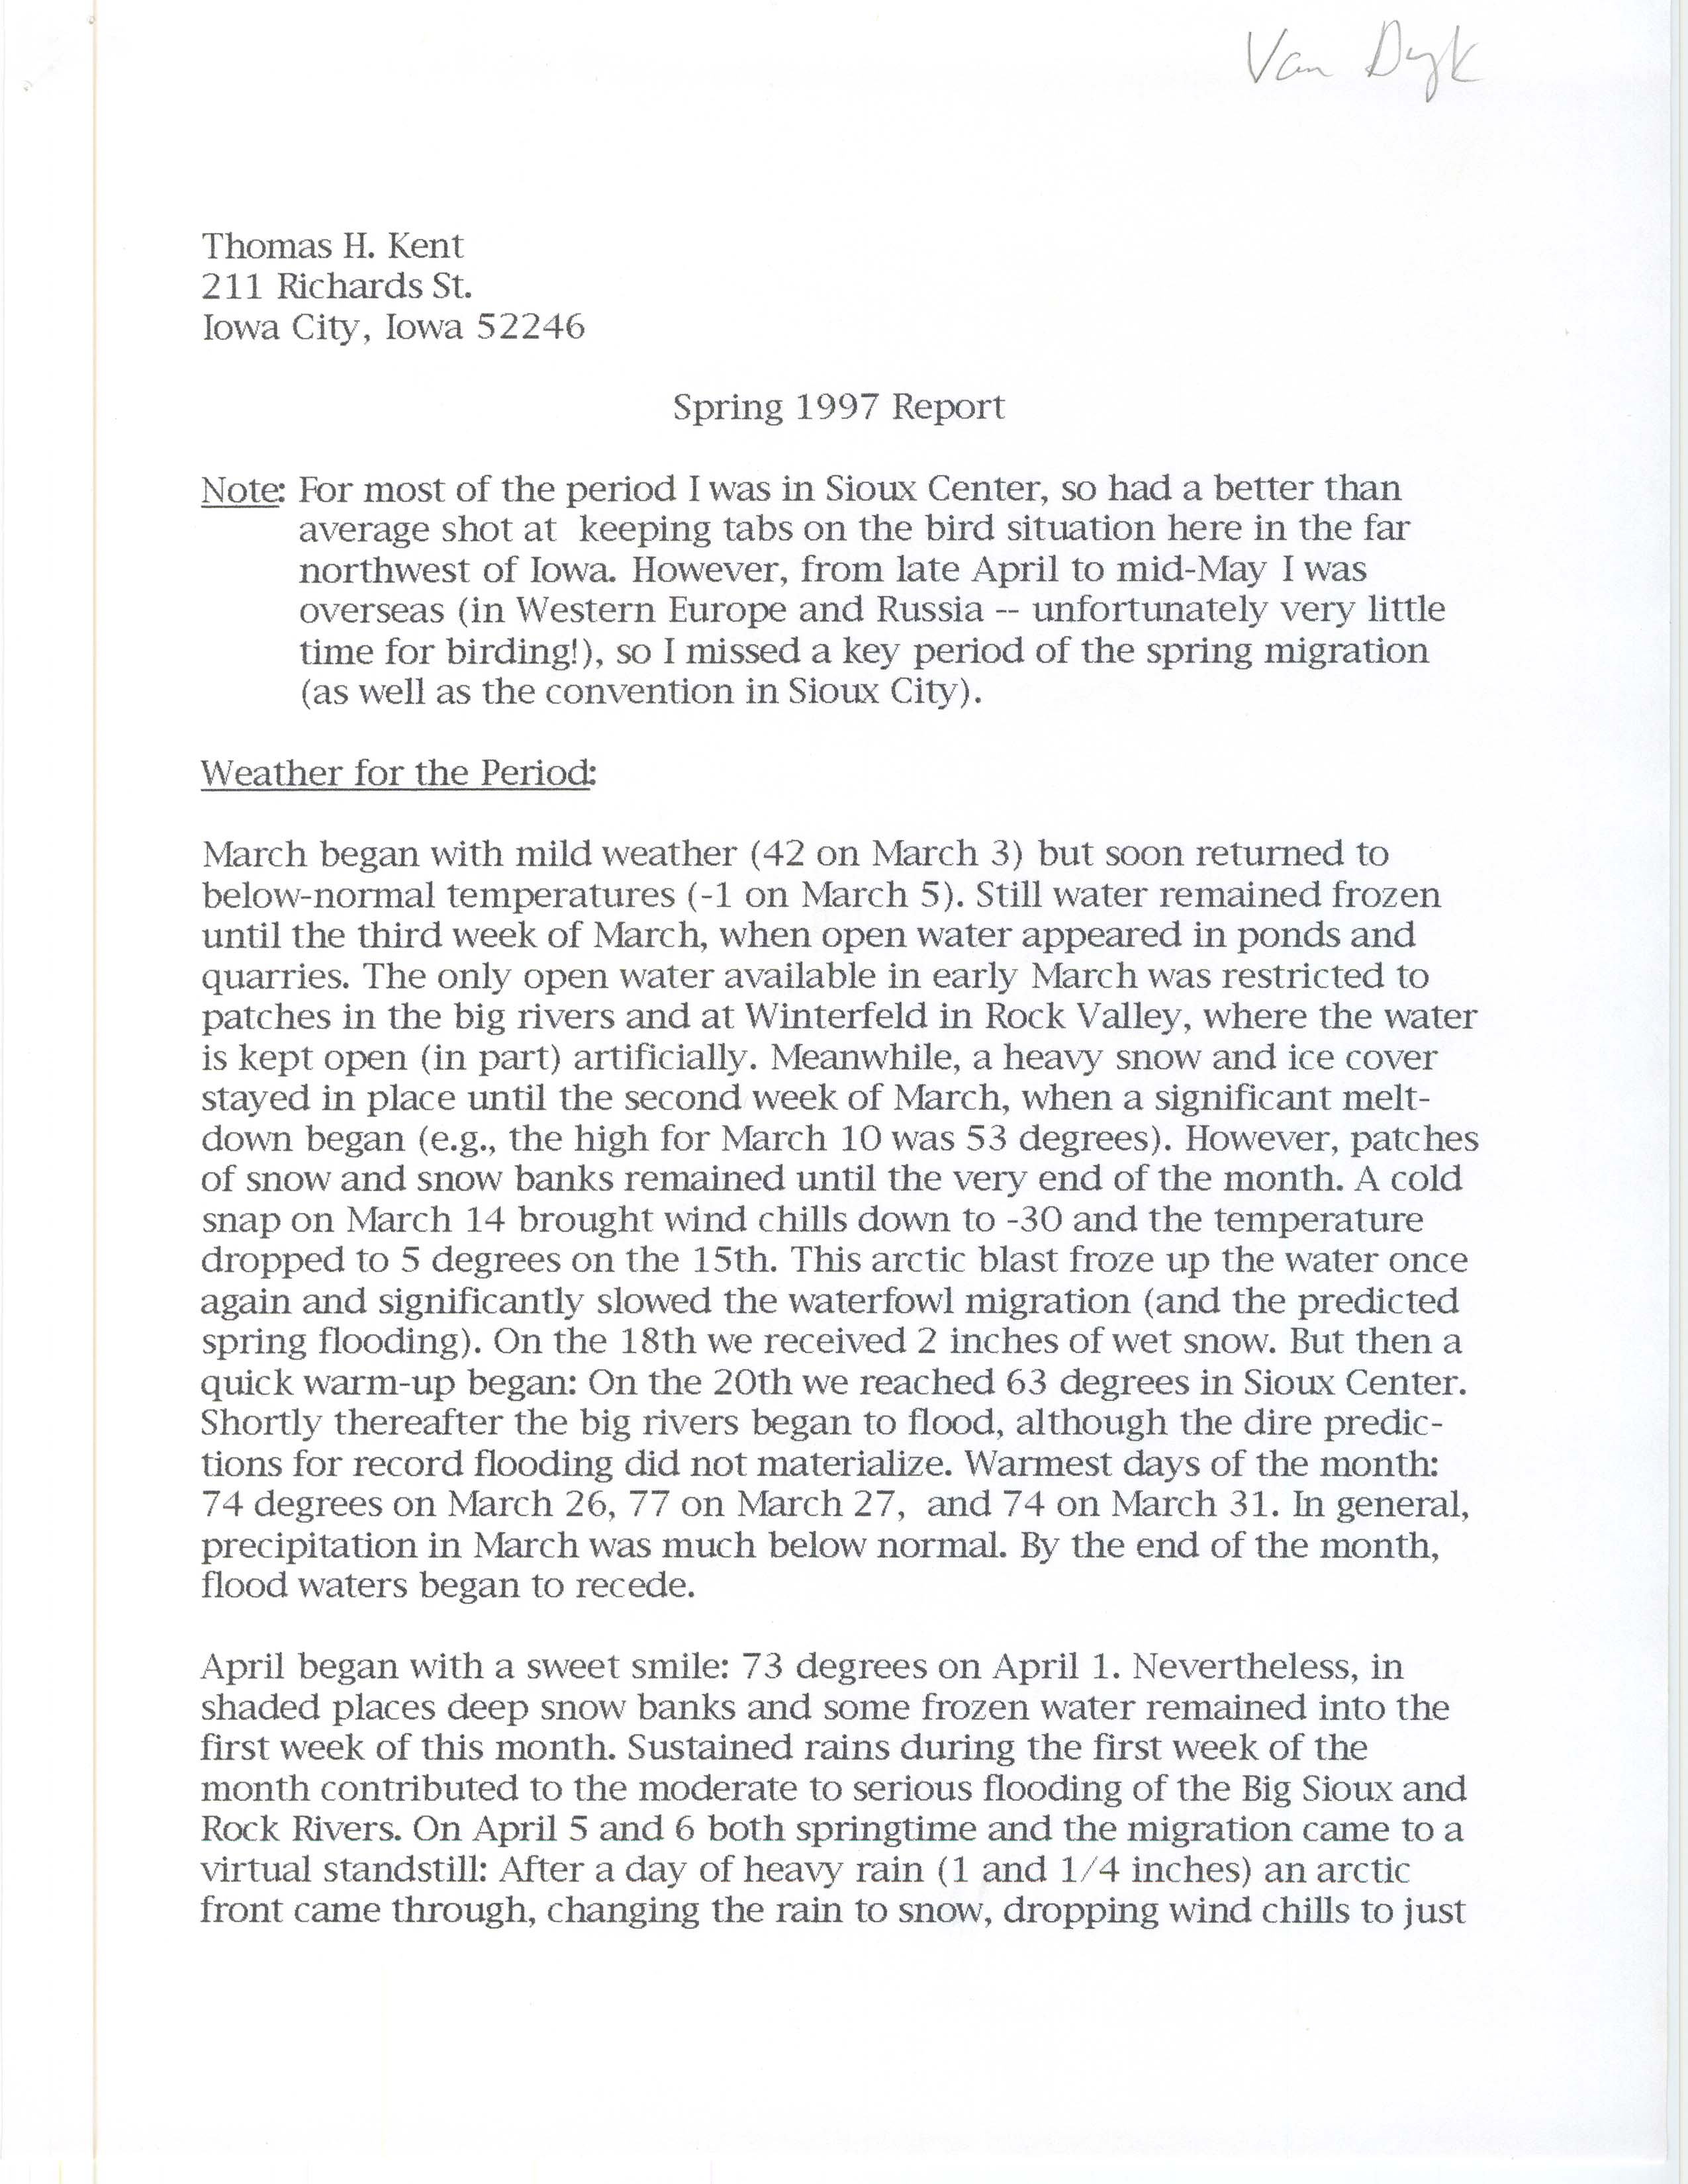 John Van Dyk letter to Thomas H. Kent regarding bird sightings, June 1, 1997